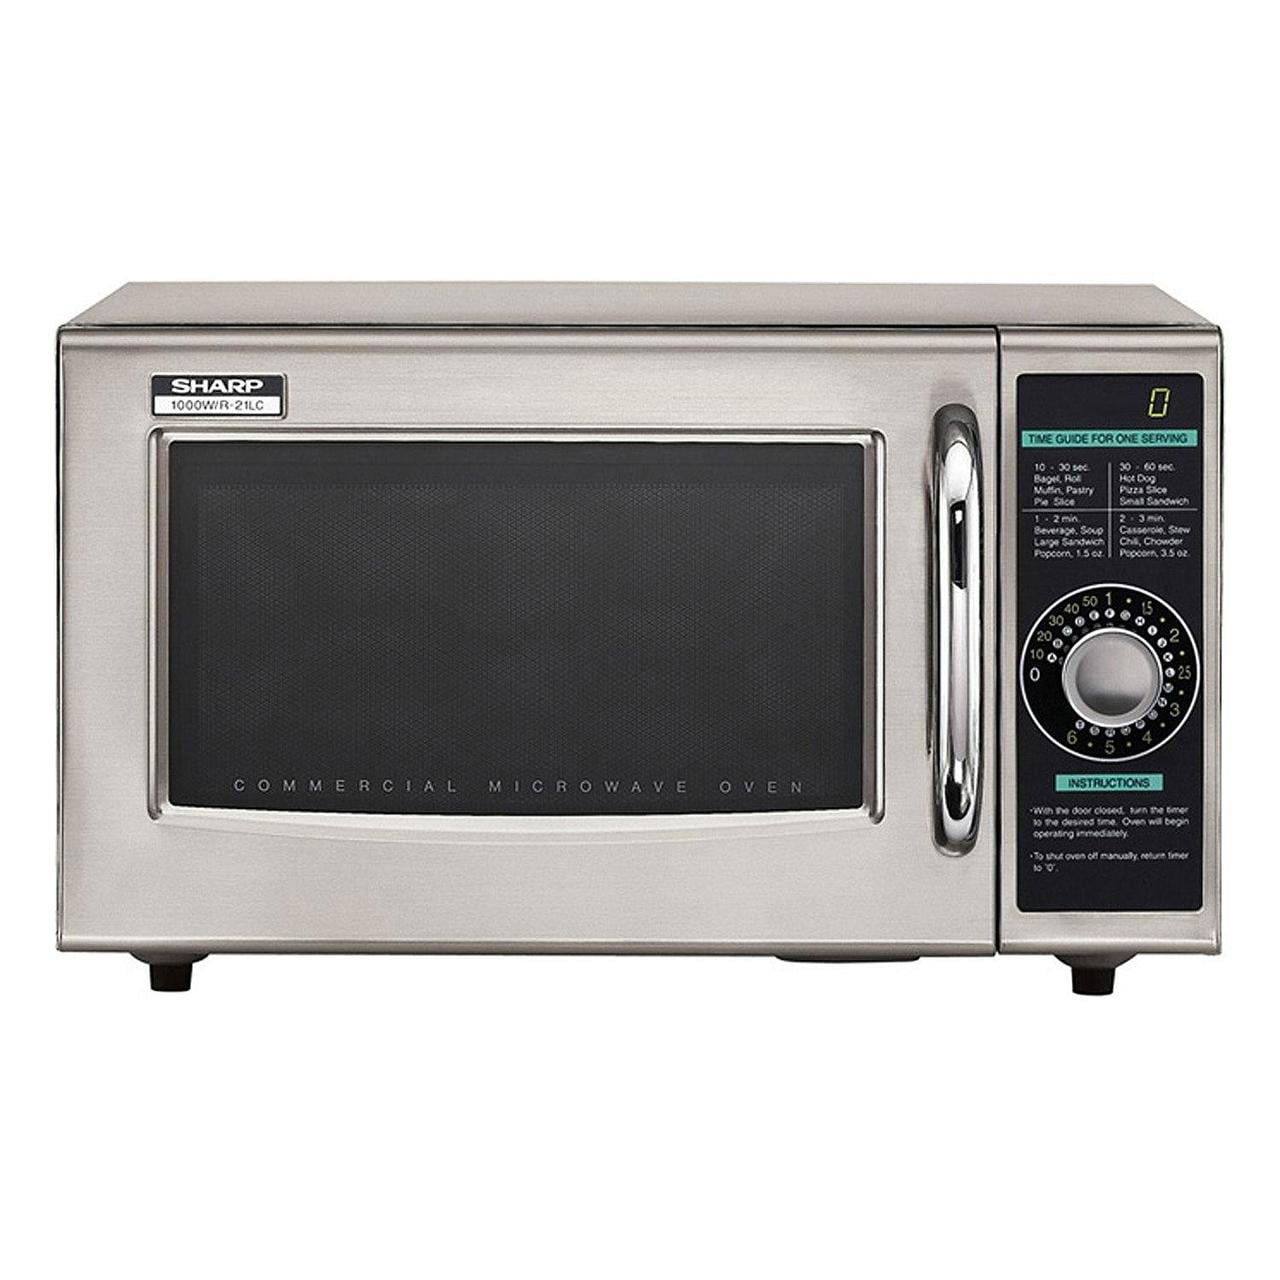 Sharp Commercial Microwave Oven - Walmart.com - Walmart.com